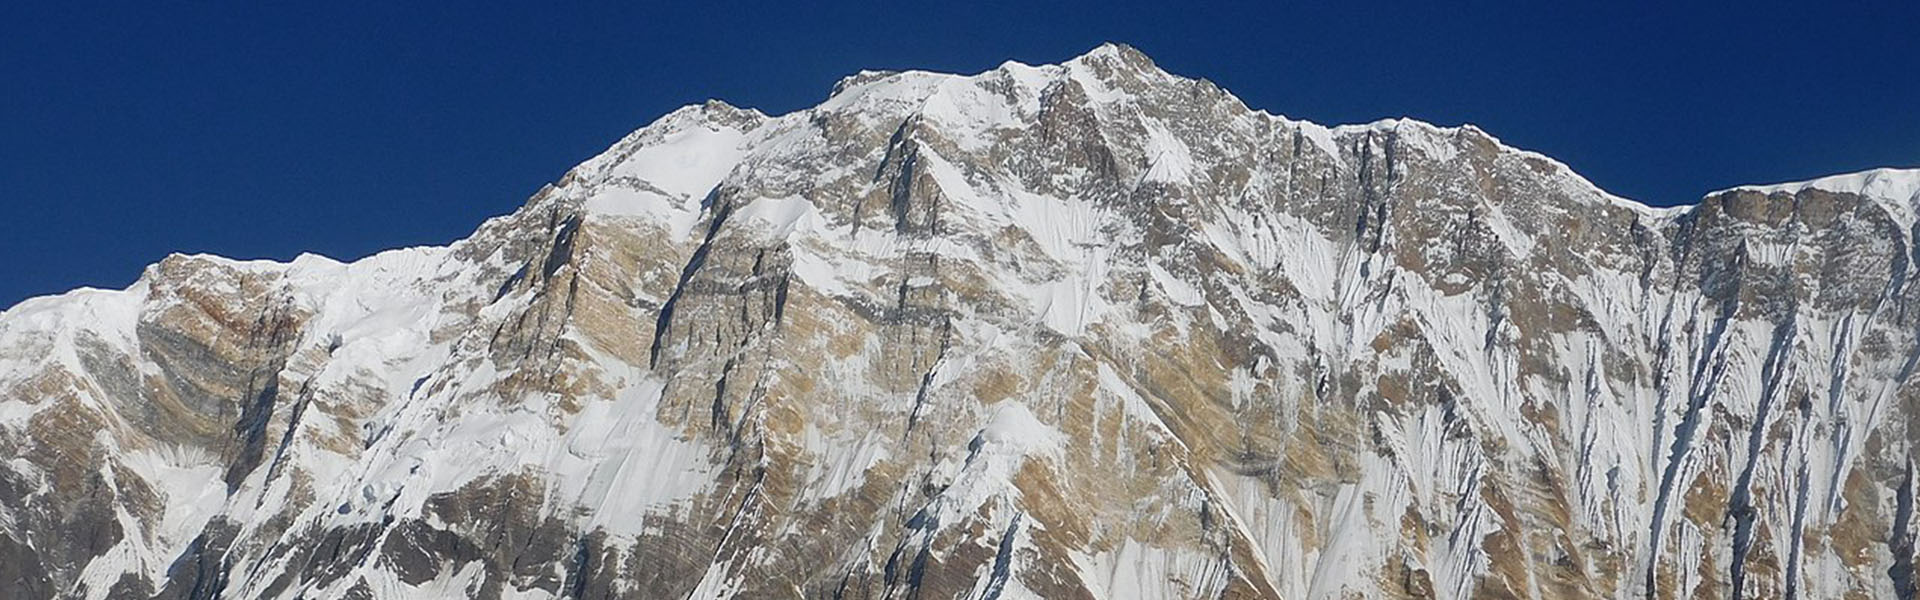 Annapurna 1 Expedition - Gurkha Adventures - Climbing Mt. Annapurna 1